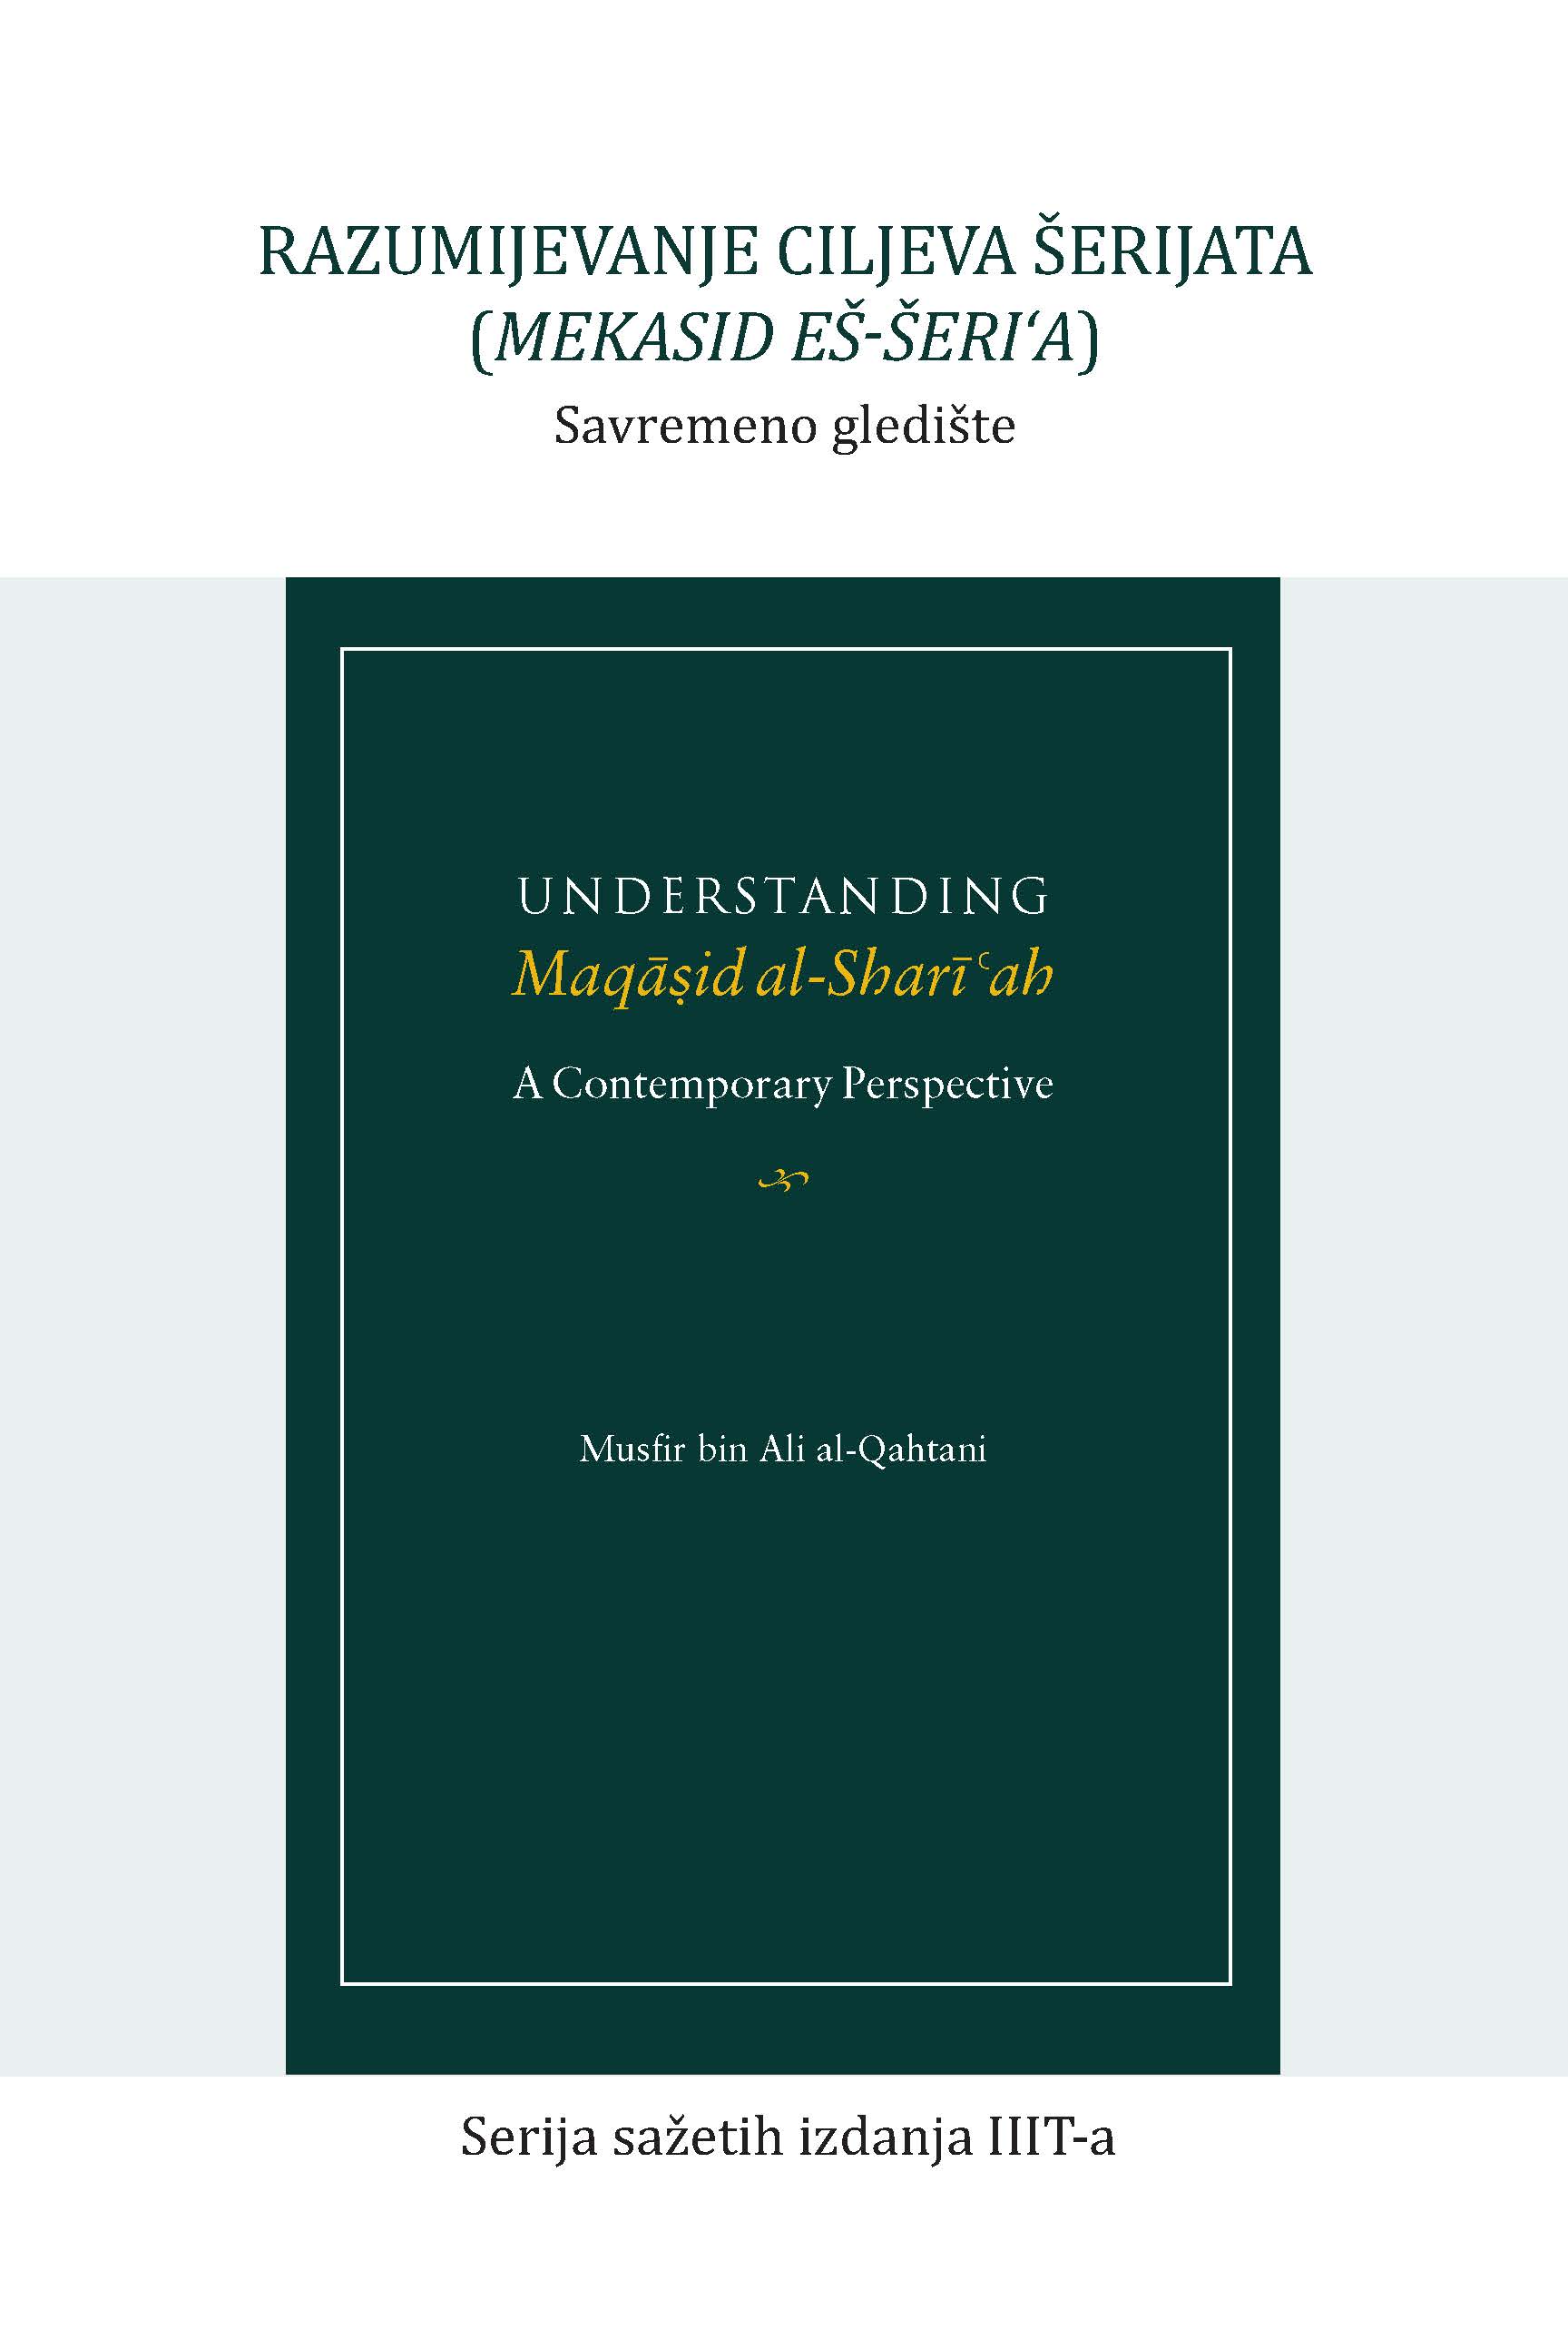 Bosnian: Books-In-Brief: Razumijevanje ciljeva šerijata mekasid eš-šeriʻa : savremeno gledište (Understanding Maqasid al-Shari’ah: A Contemporary Perspective)